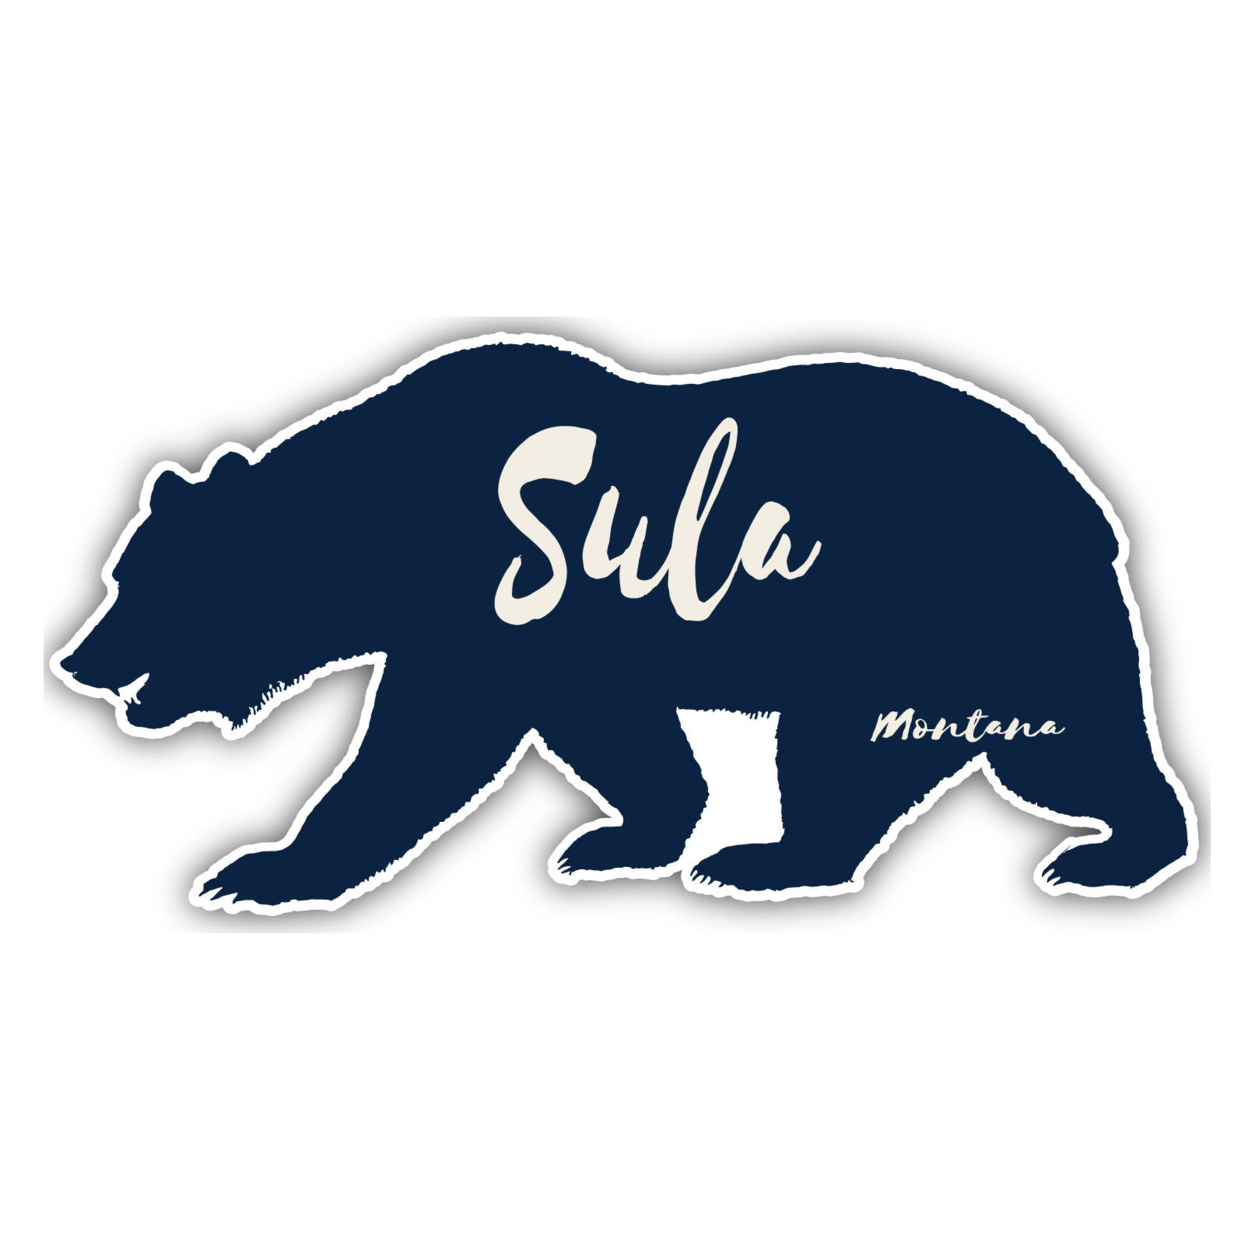 Sula Montana Souvenir Decorative Stickers (Choose Theme And Size) - Single Unit, 4-Inch, Adventures Awaits